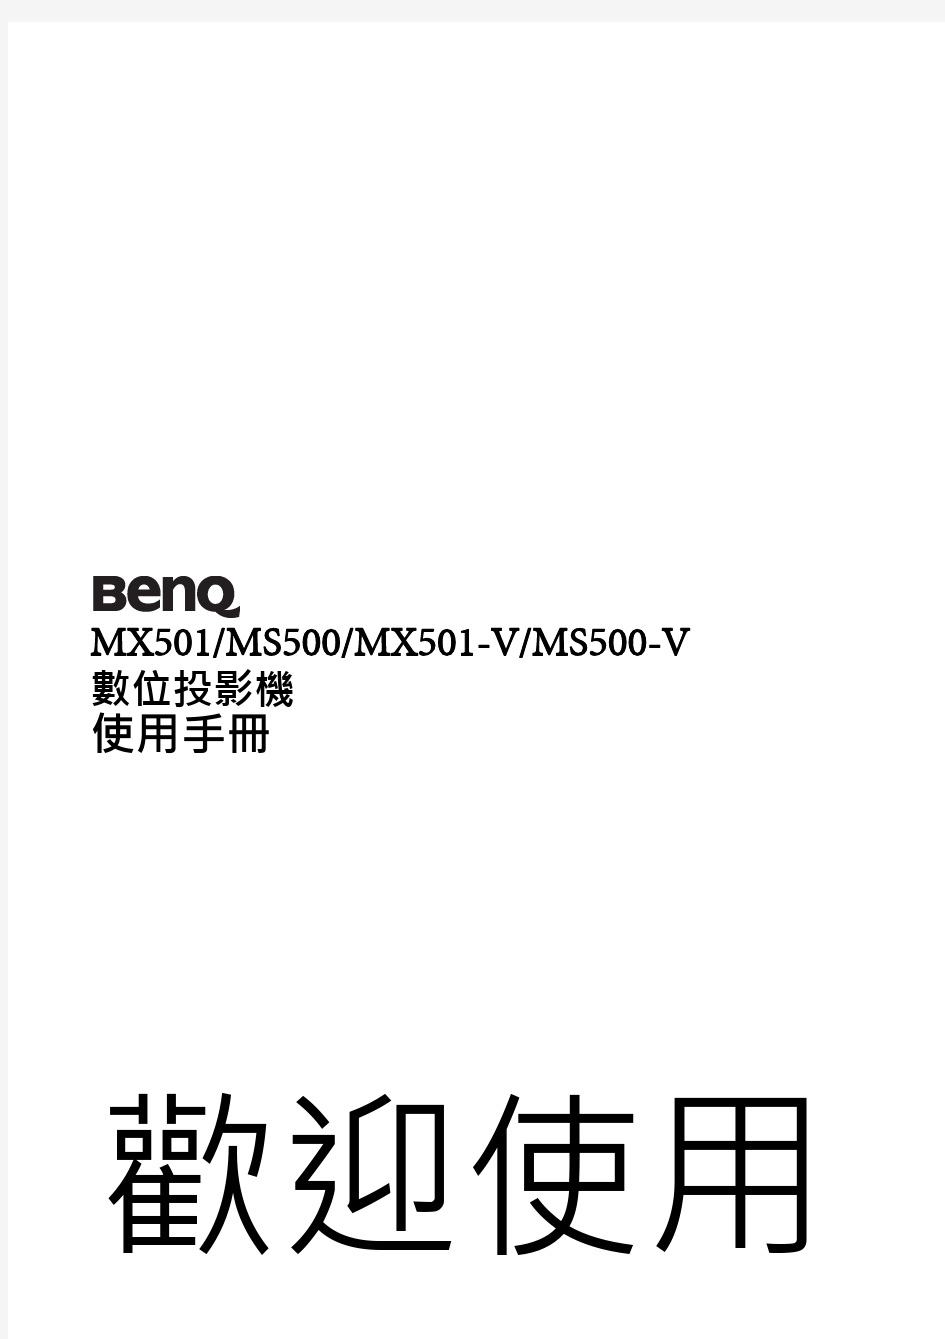 BenQ投影机ms500使用说明书